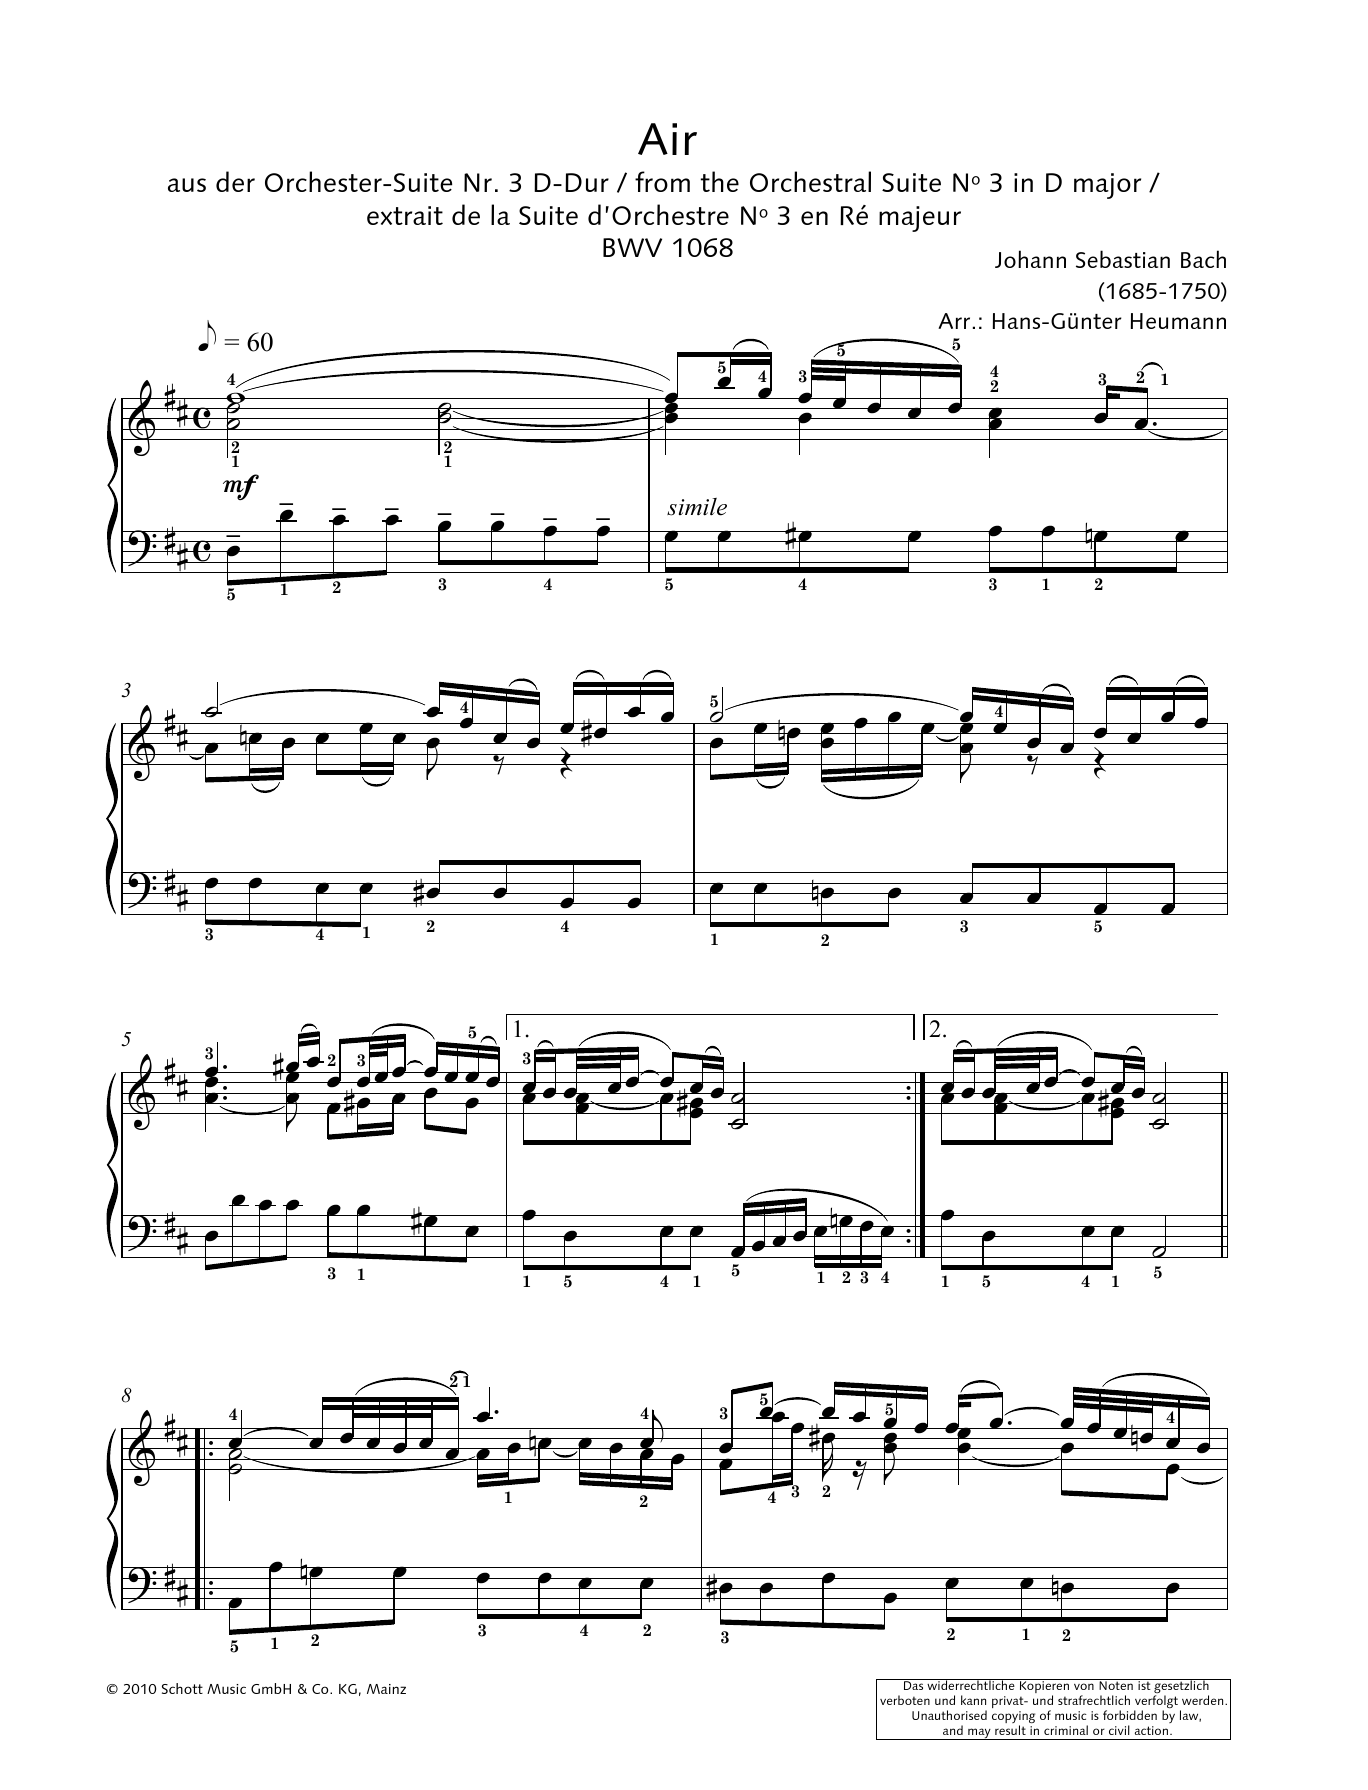 Johann Sebastian Bach Air Sheet Music Notes & Chords for String Solo - Download or Print PDF